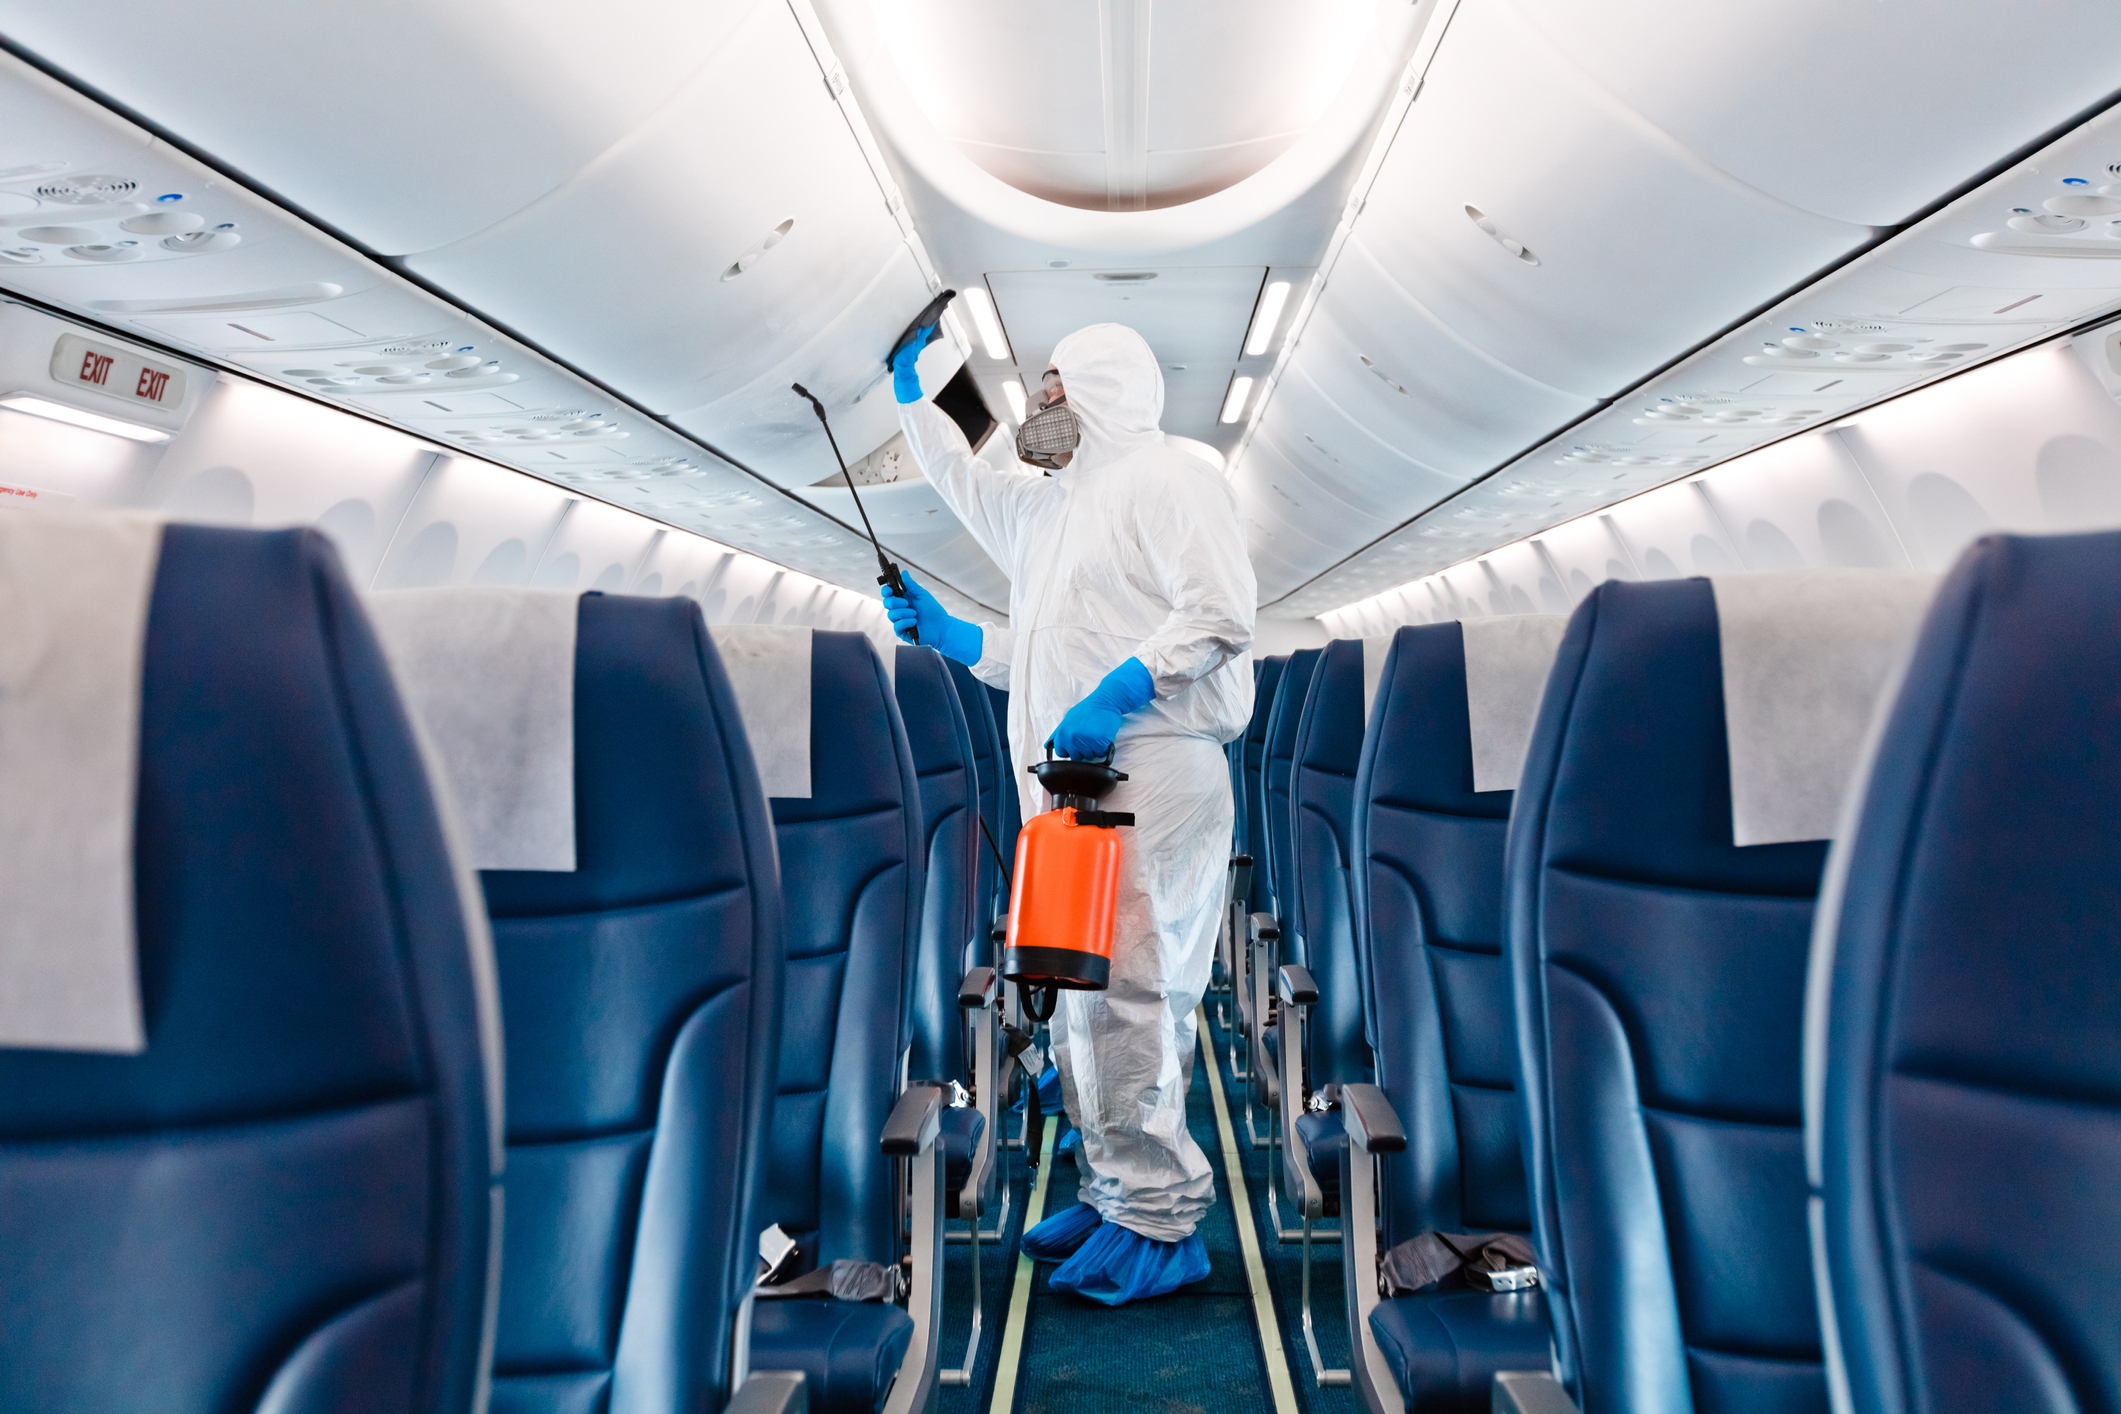 Southwest No Longer Cleaning Armrests and Seat Belts Between Flights